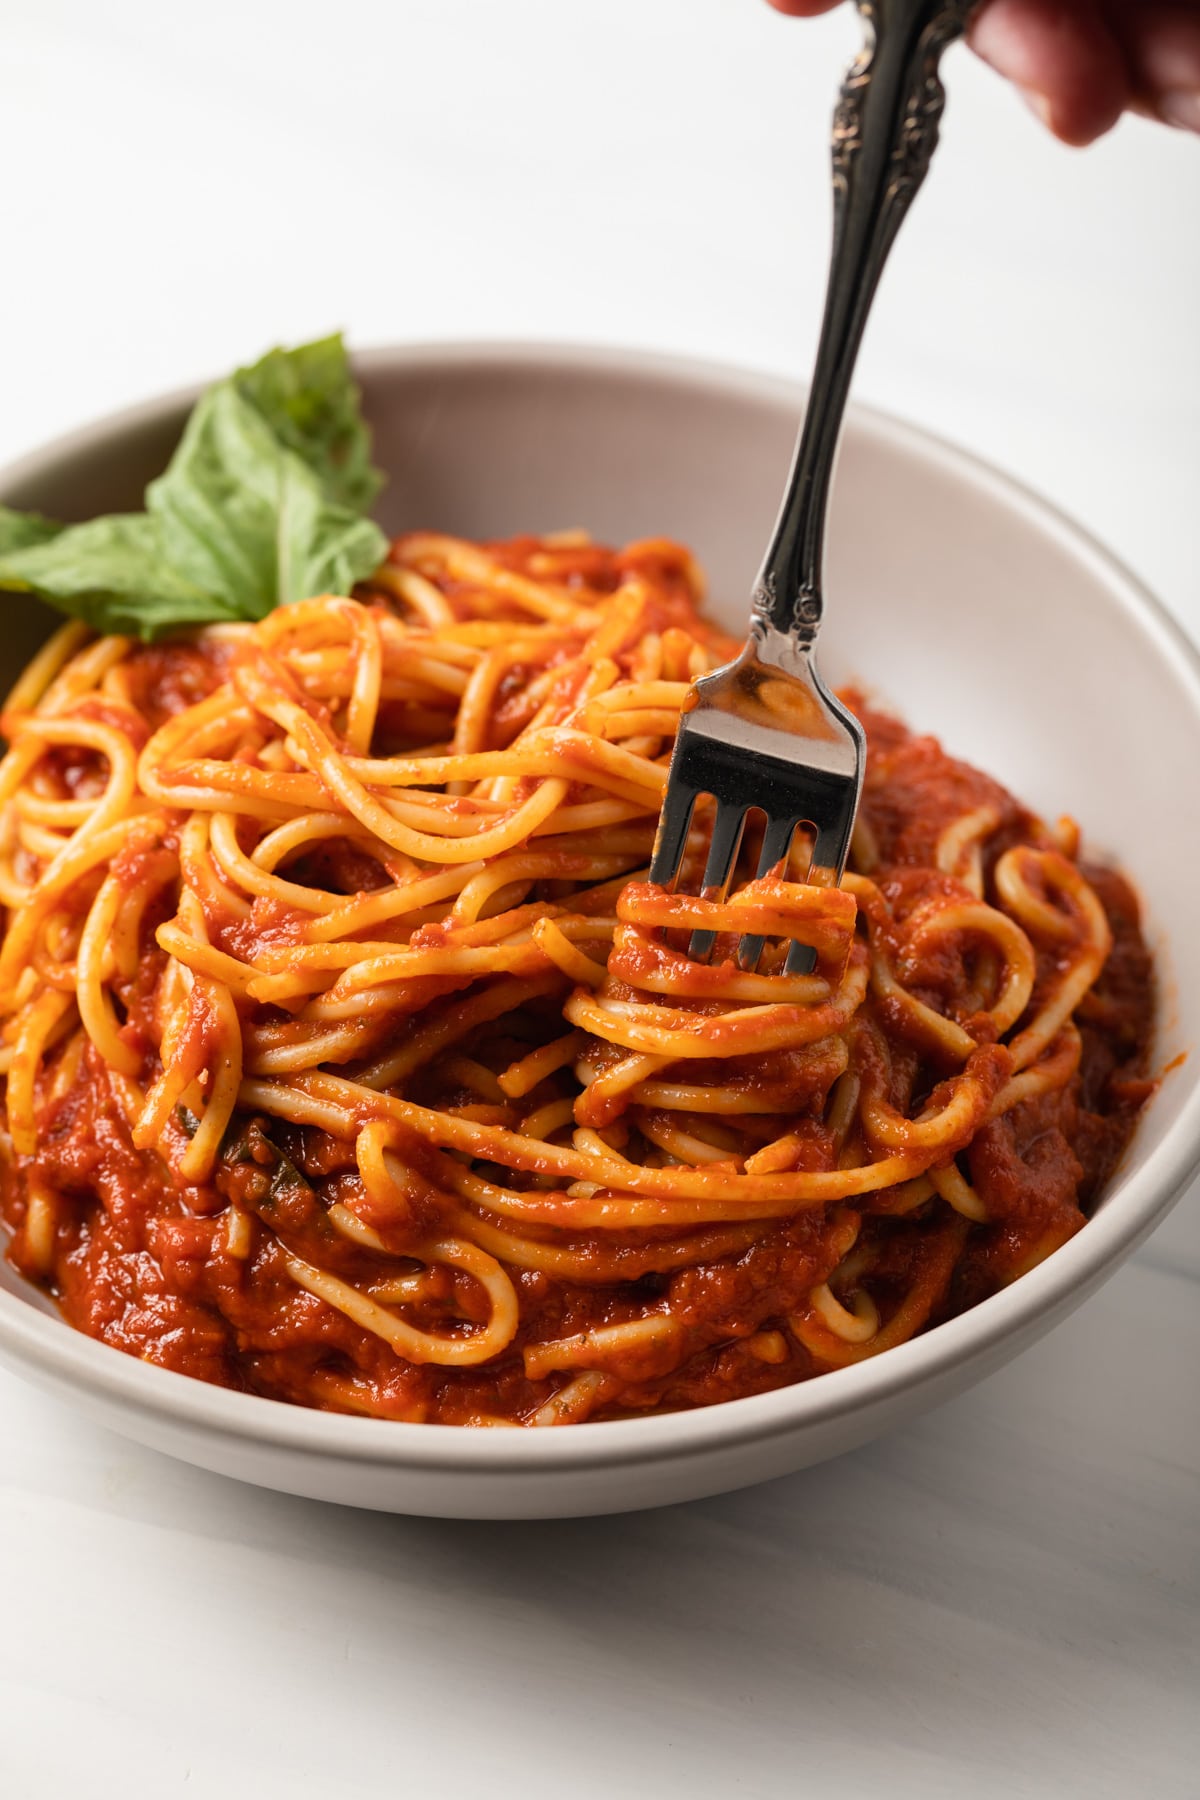 Spaghetti with pomodoro sauce.